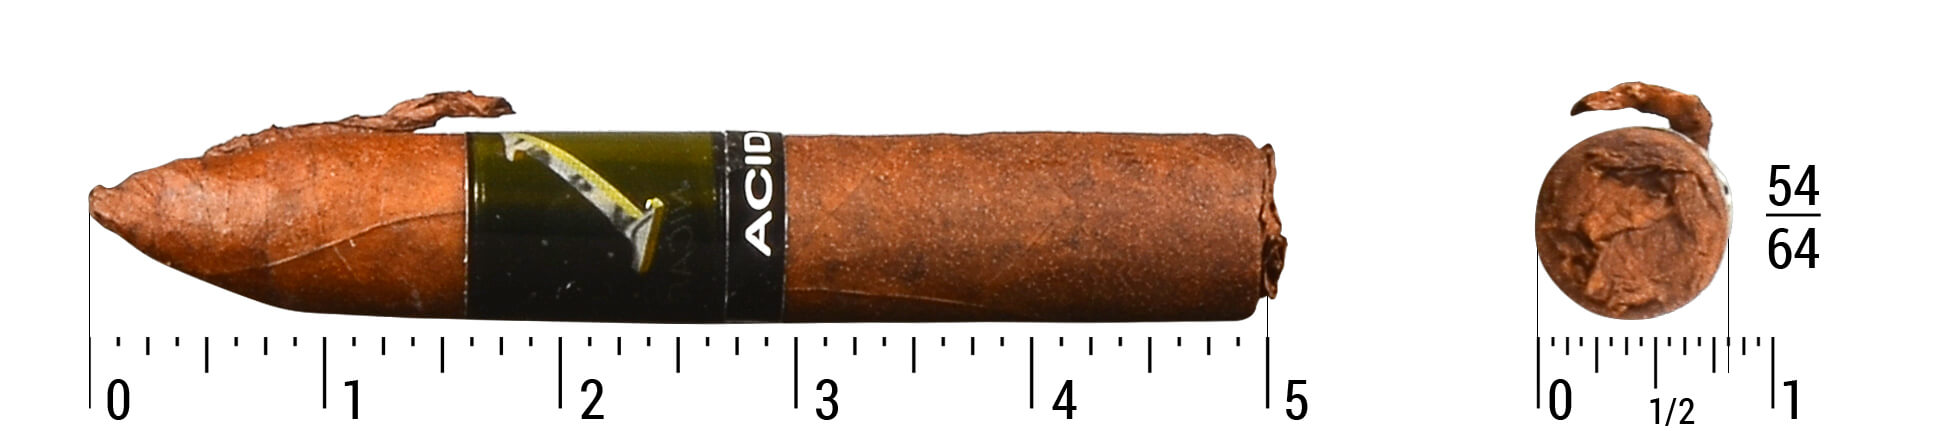 Acid One Single Cigar Size